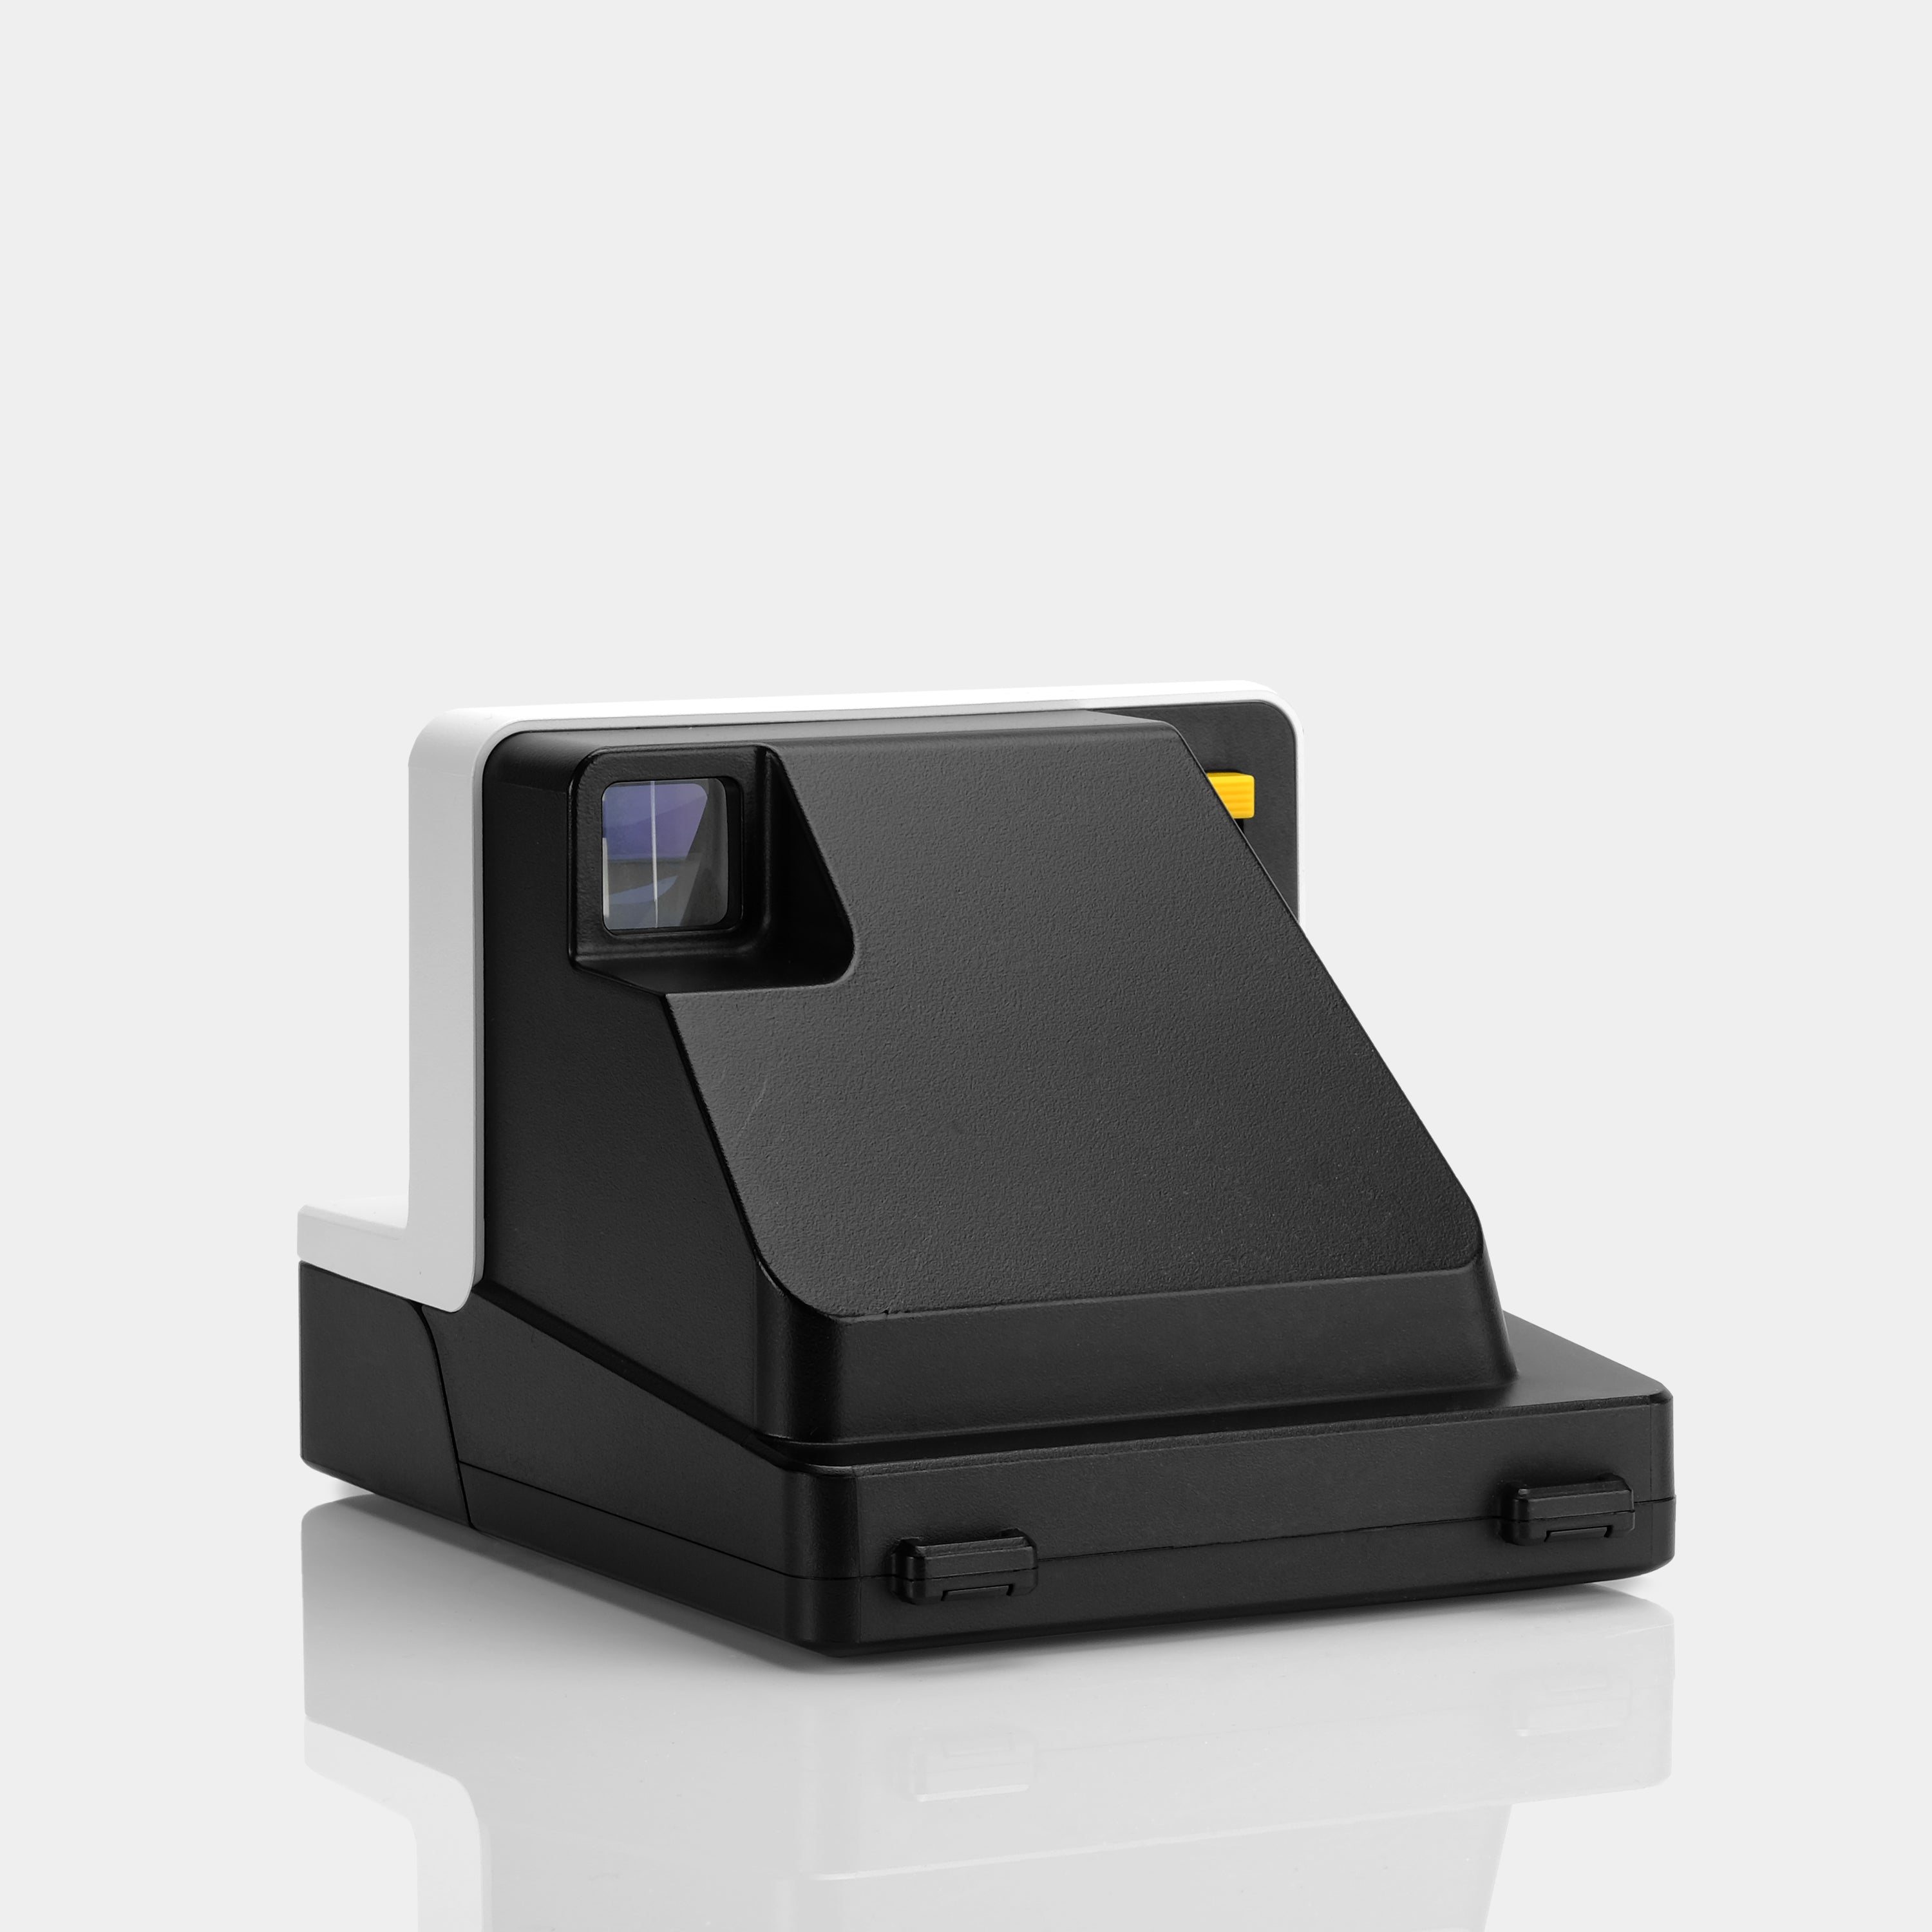 Polaroid i-Type OneStep 2 Black and White Instant Film Camera - Refurbished